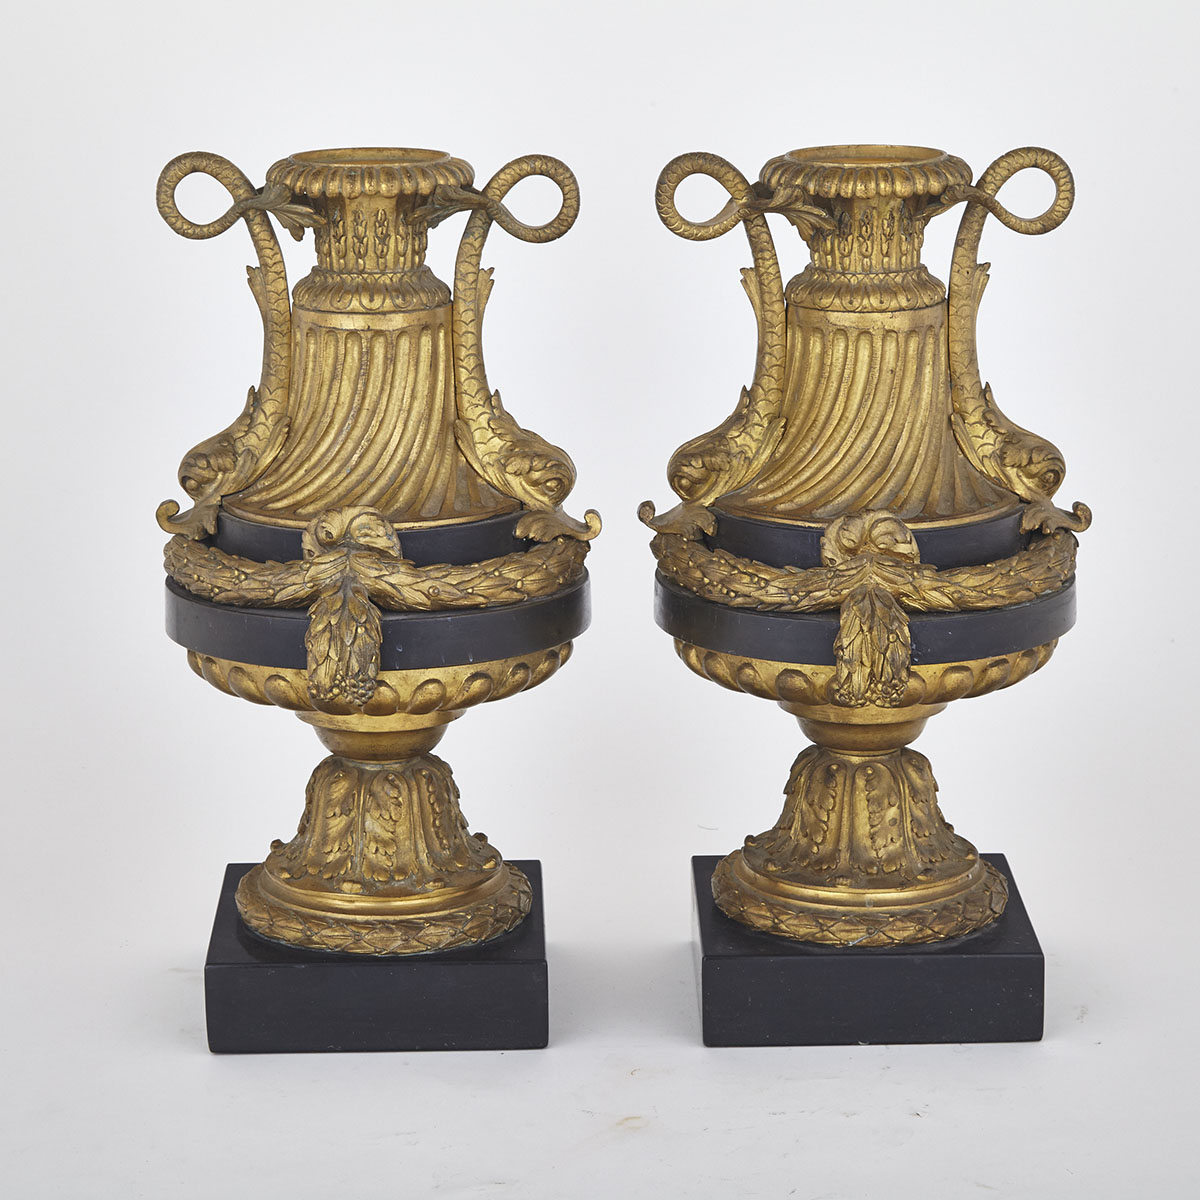 Pair of Large Louis XVI Style Ormolu Mounted Patinated Bronze Urns, 19th century